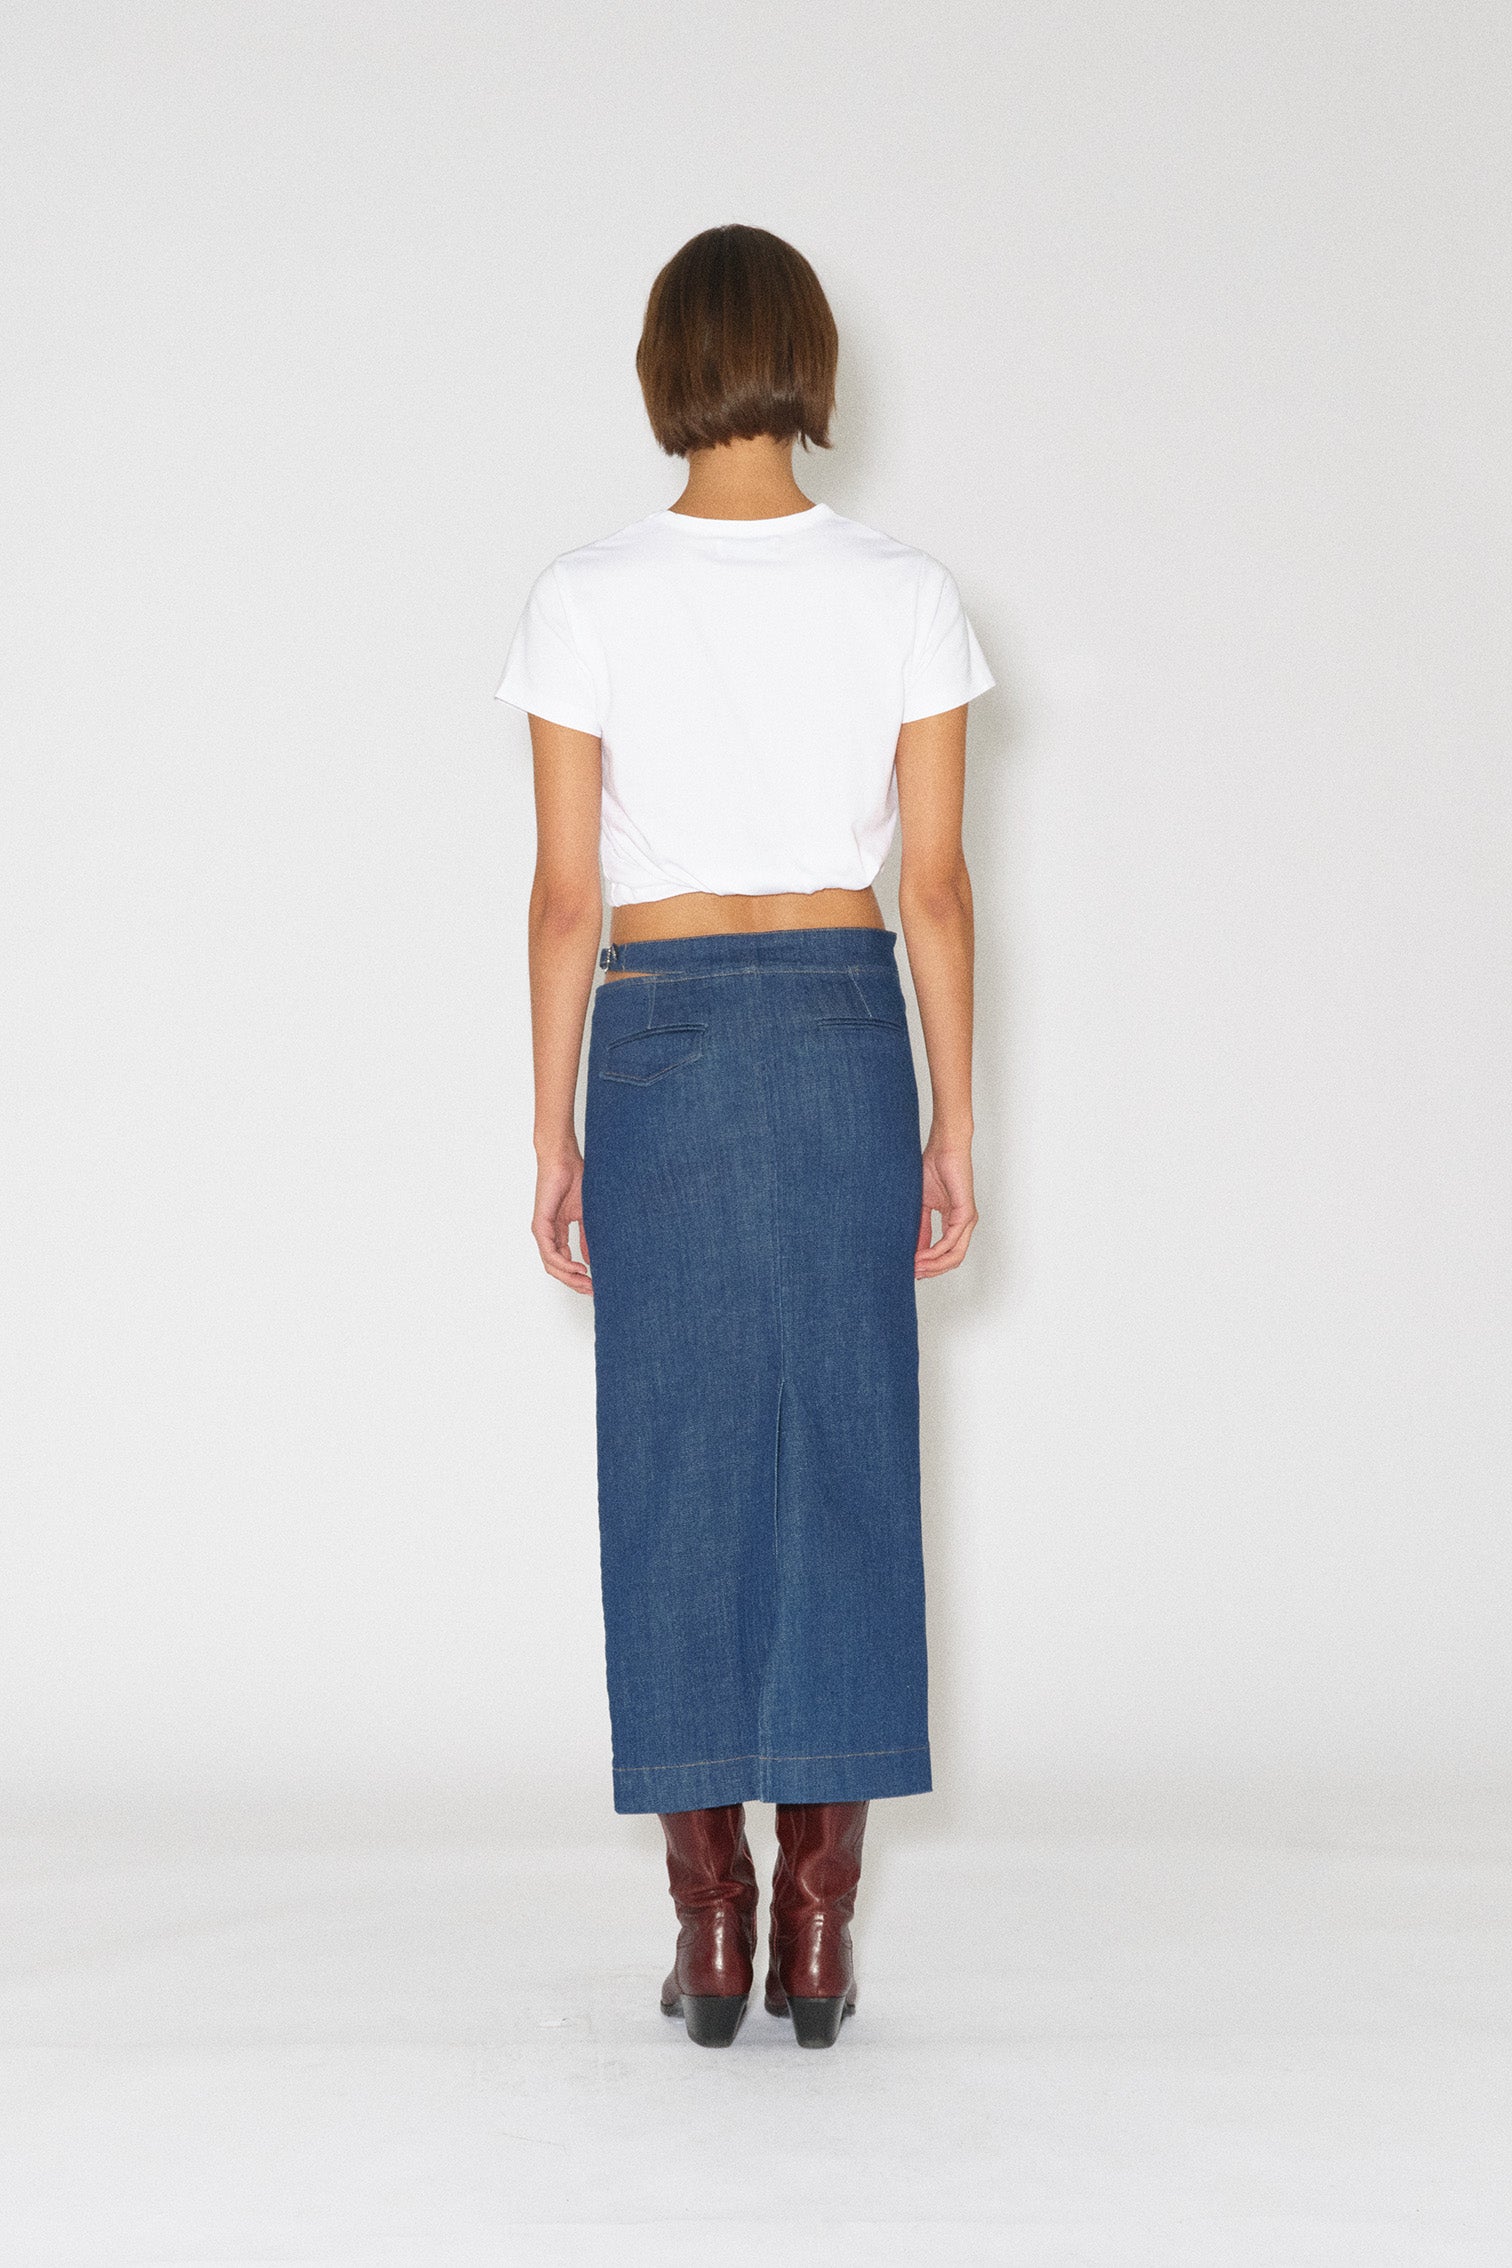 Tomorrow TMRW Brown Stitch Skirt - Crude Indigo Skirt 51 Denim Blue